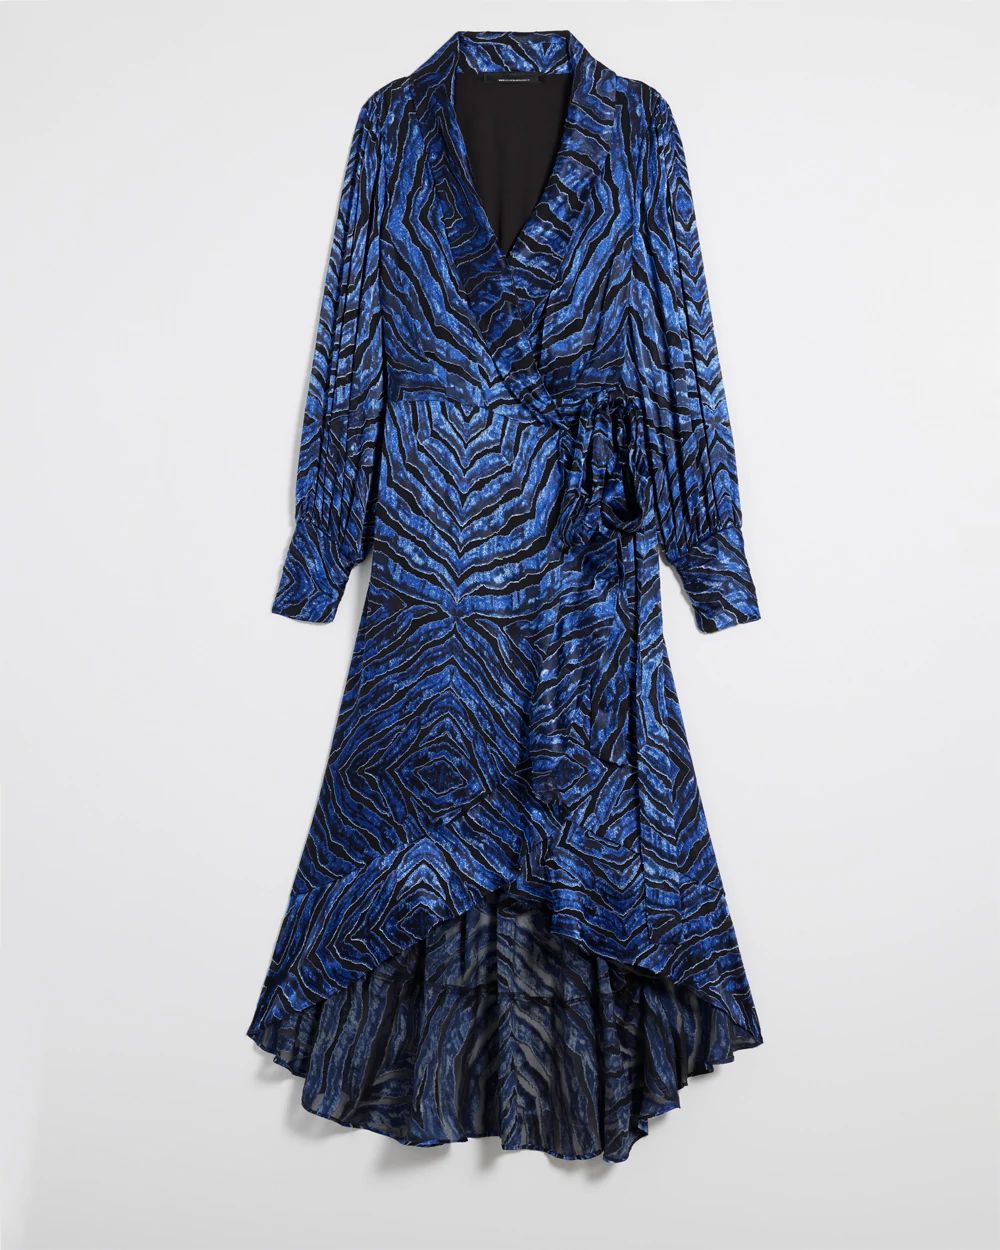 Long Sleeve Silk Burnout Wrap Dress click to view larger image.